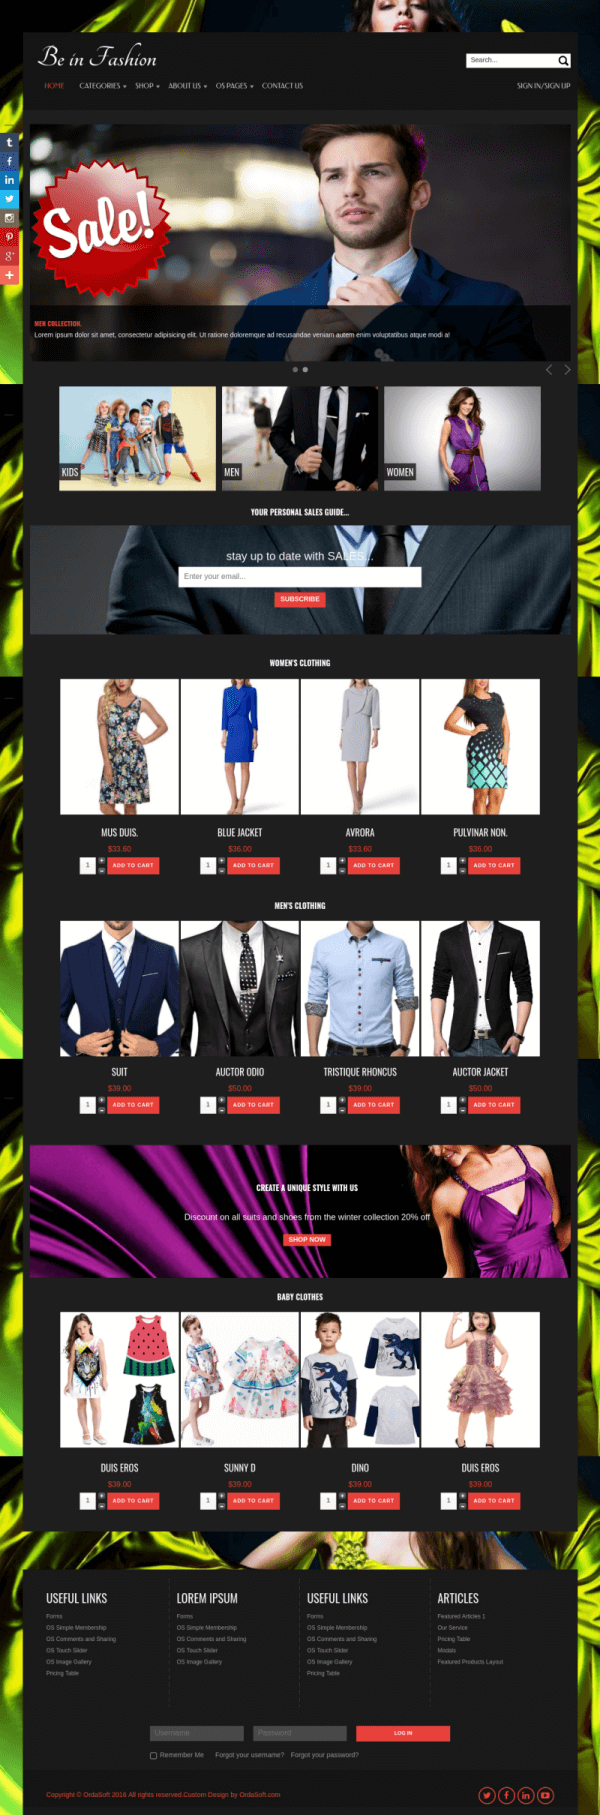 Be in Fashion, Virtuemart Joomla template, full screen